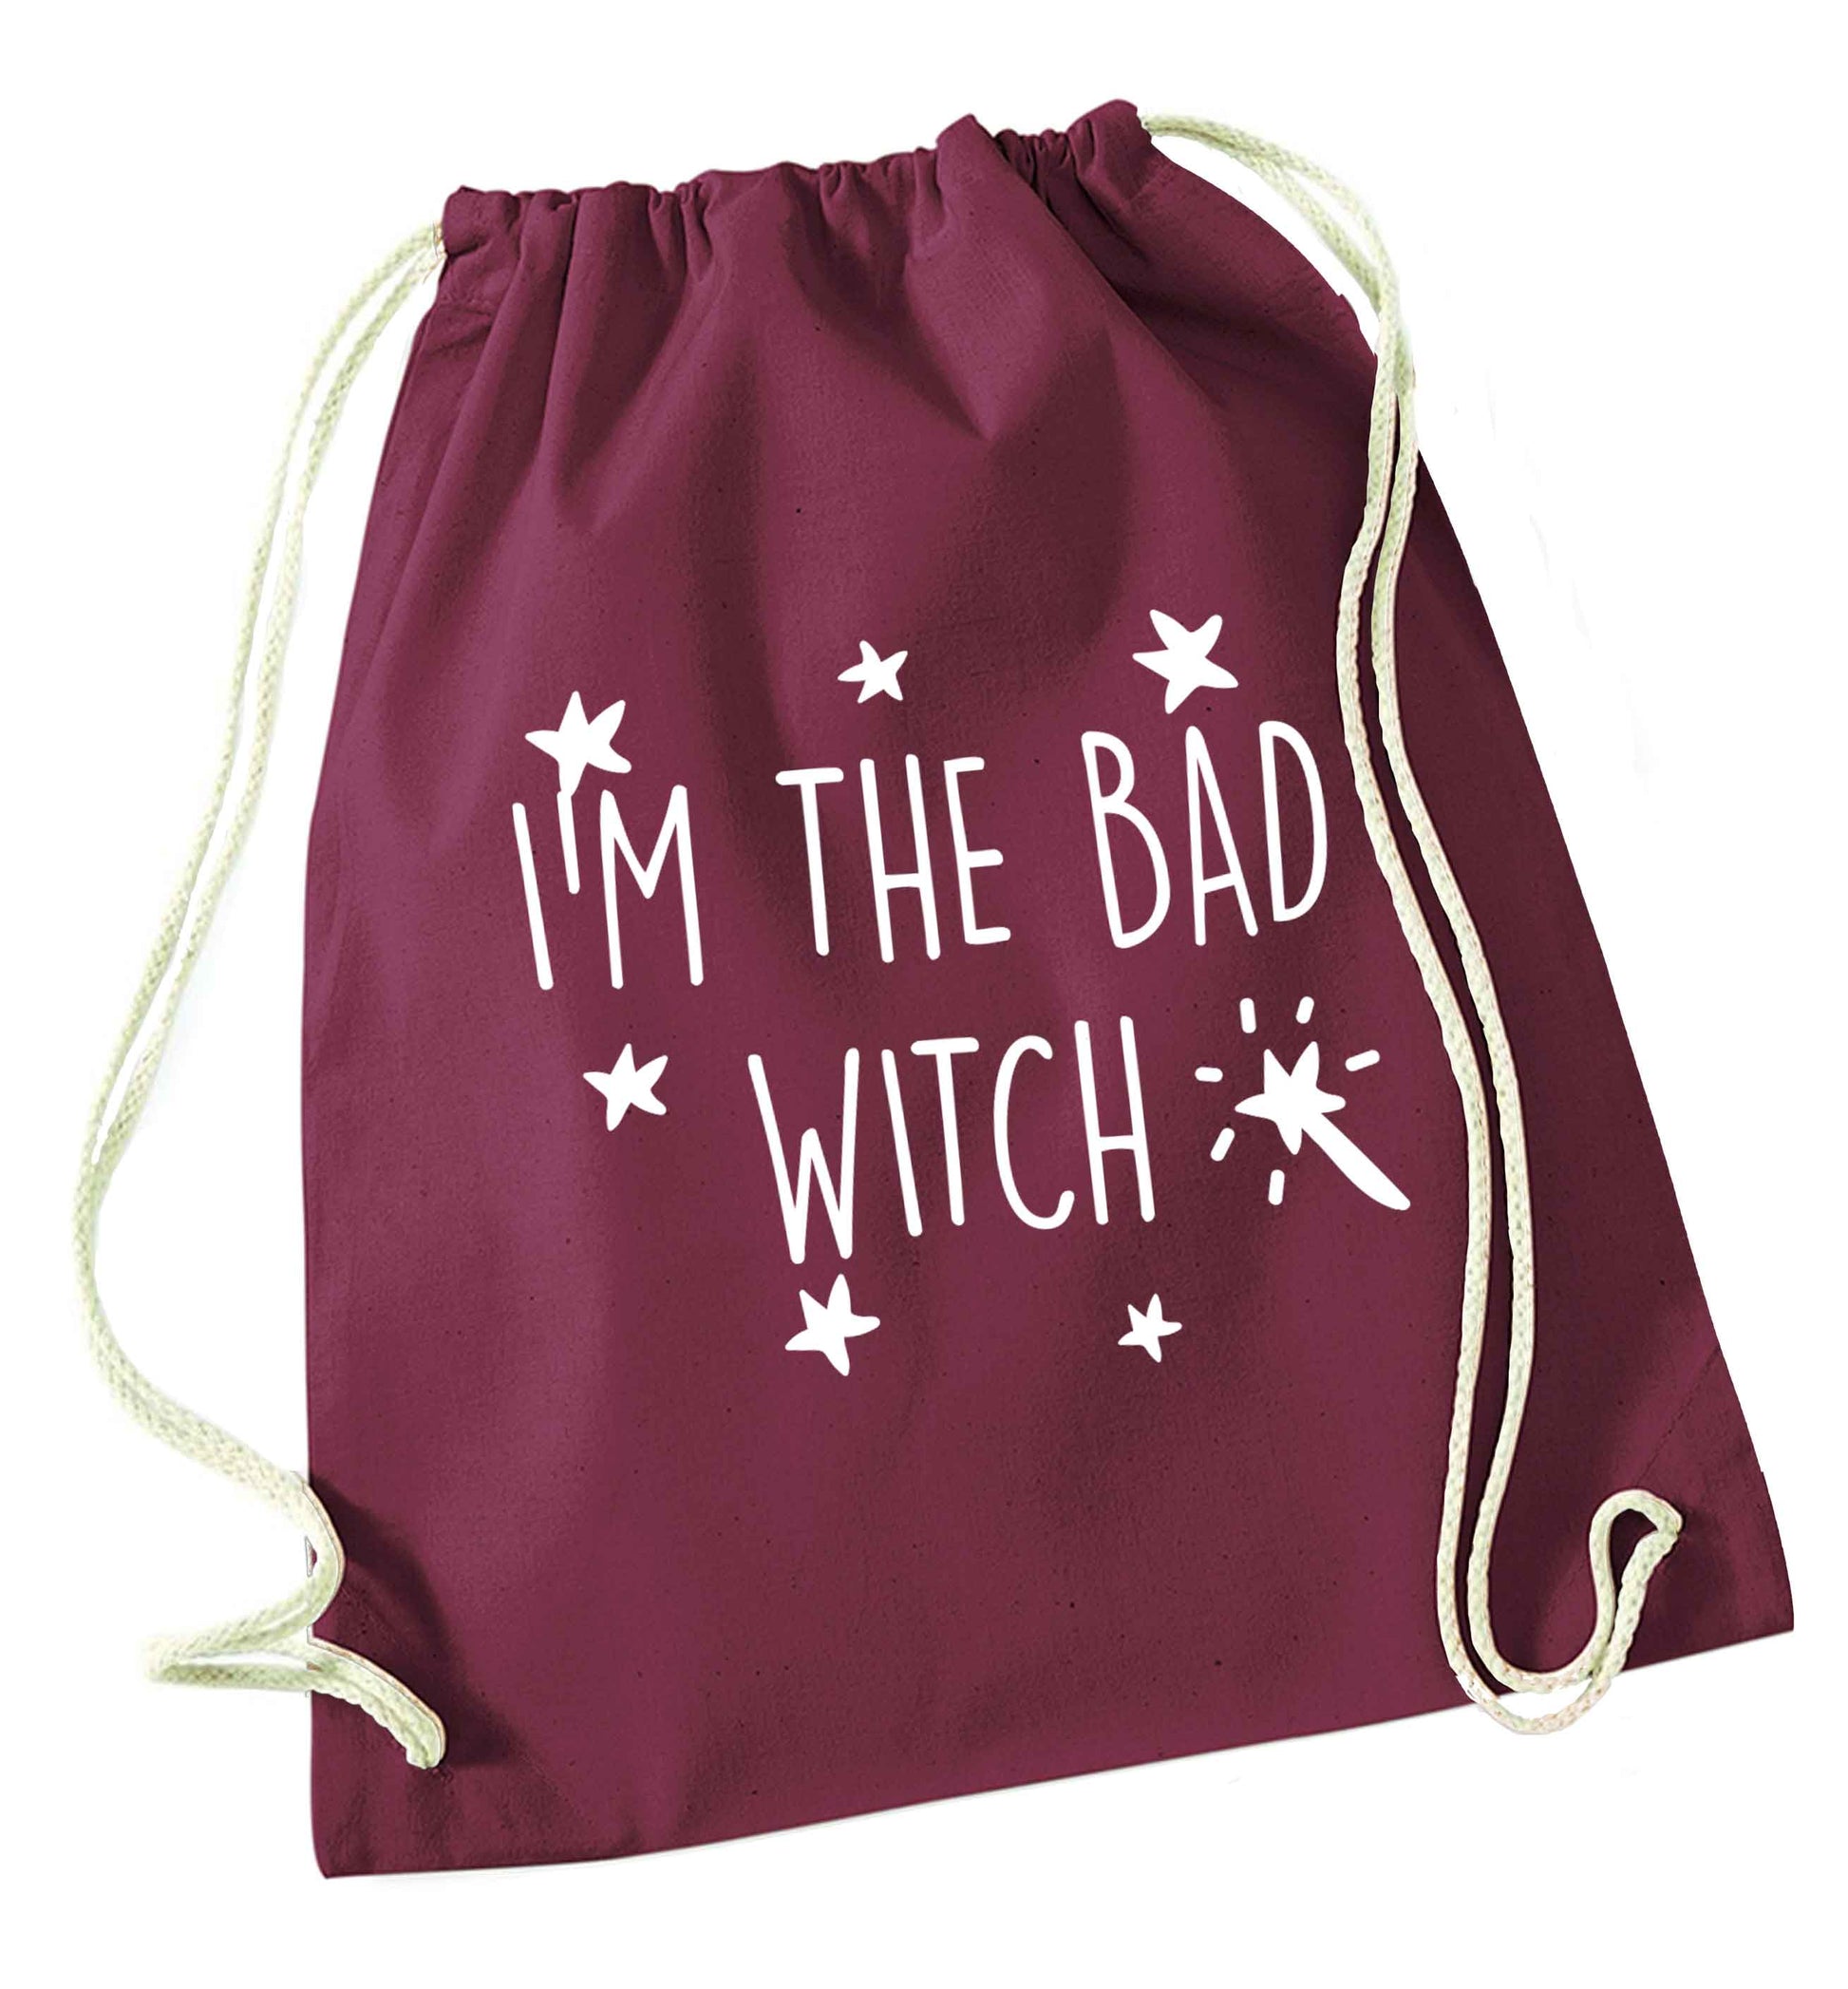 Bad witch maroon drawstring bag